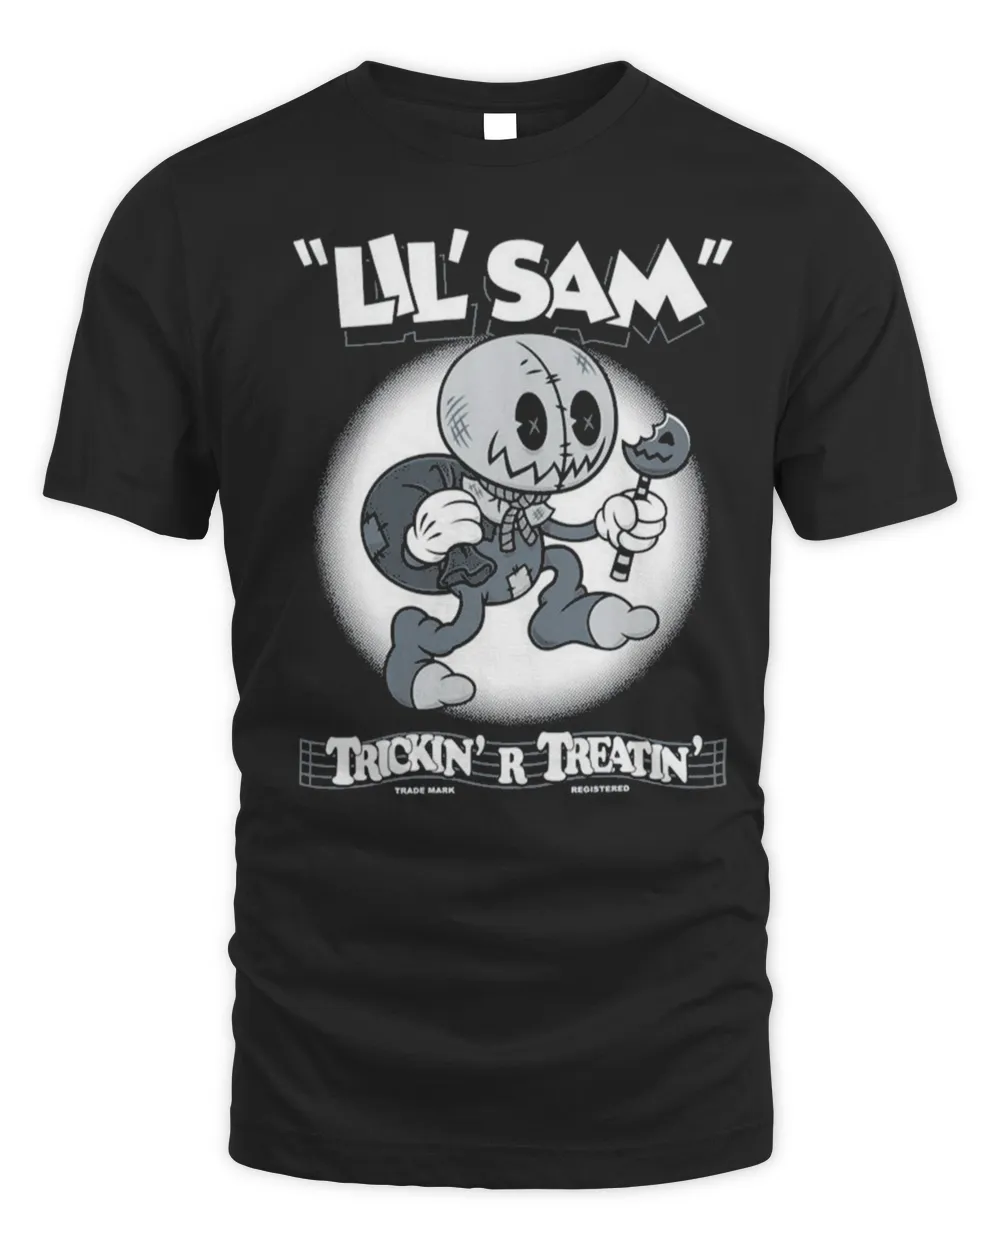 Lil’ Sam Creepy Cute Trick R Treat Vintage Cartoon Halloween Horror Tee shirt